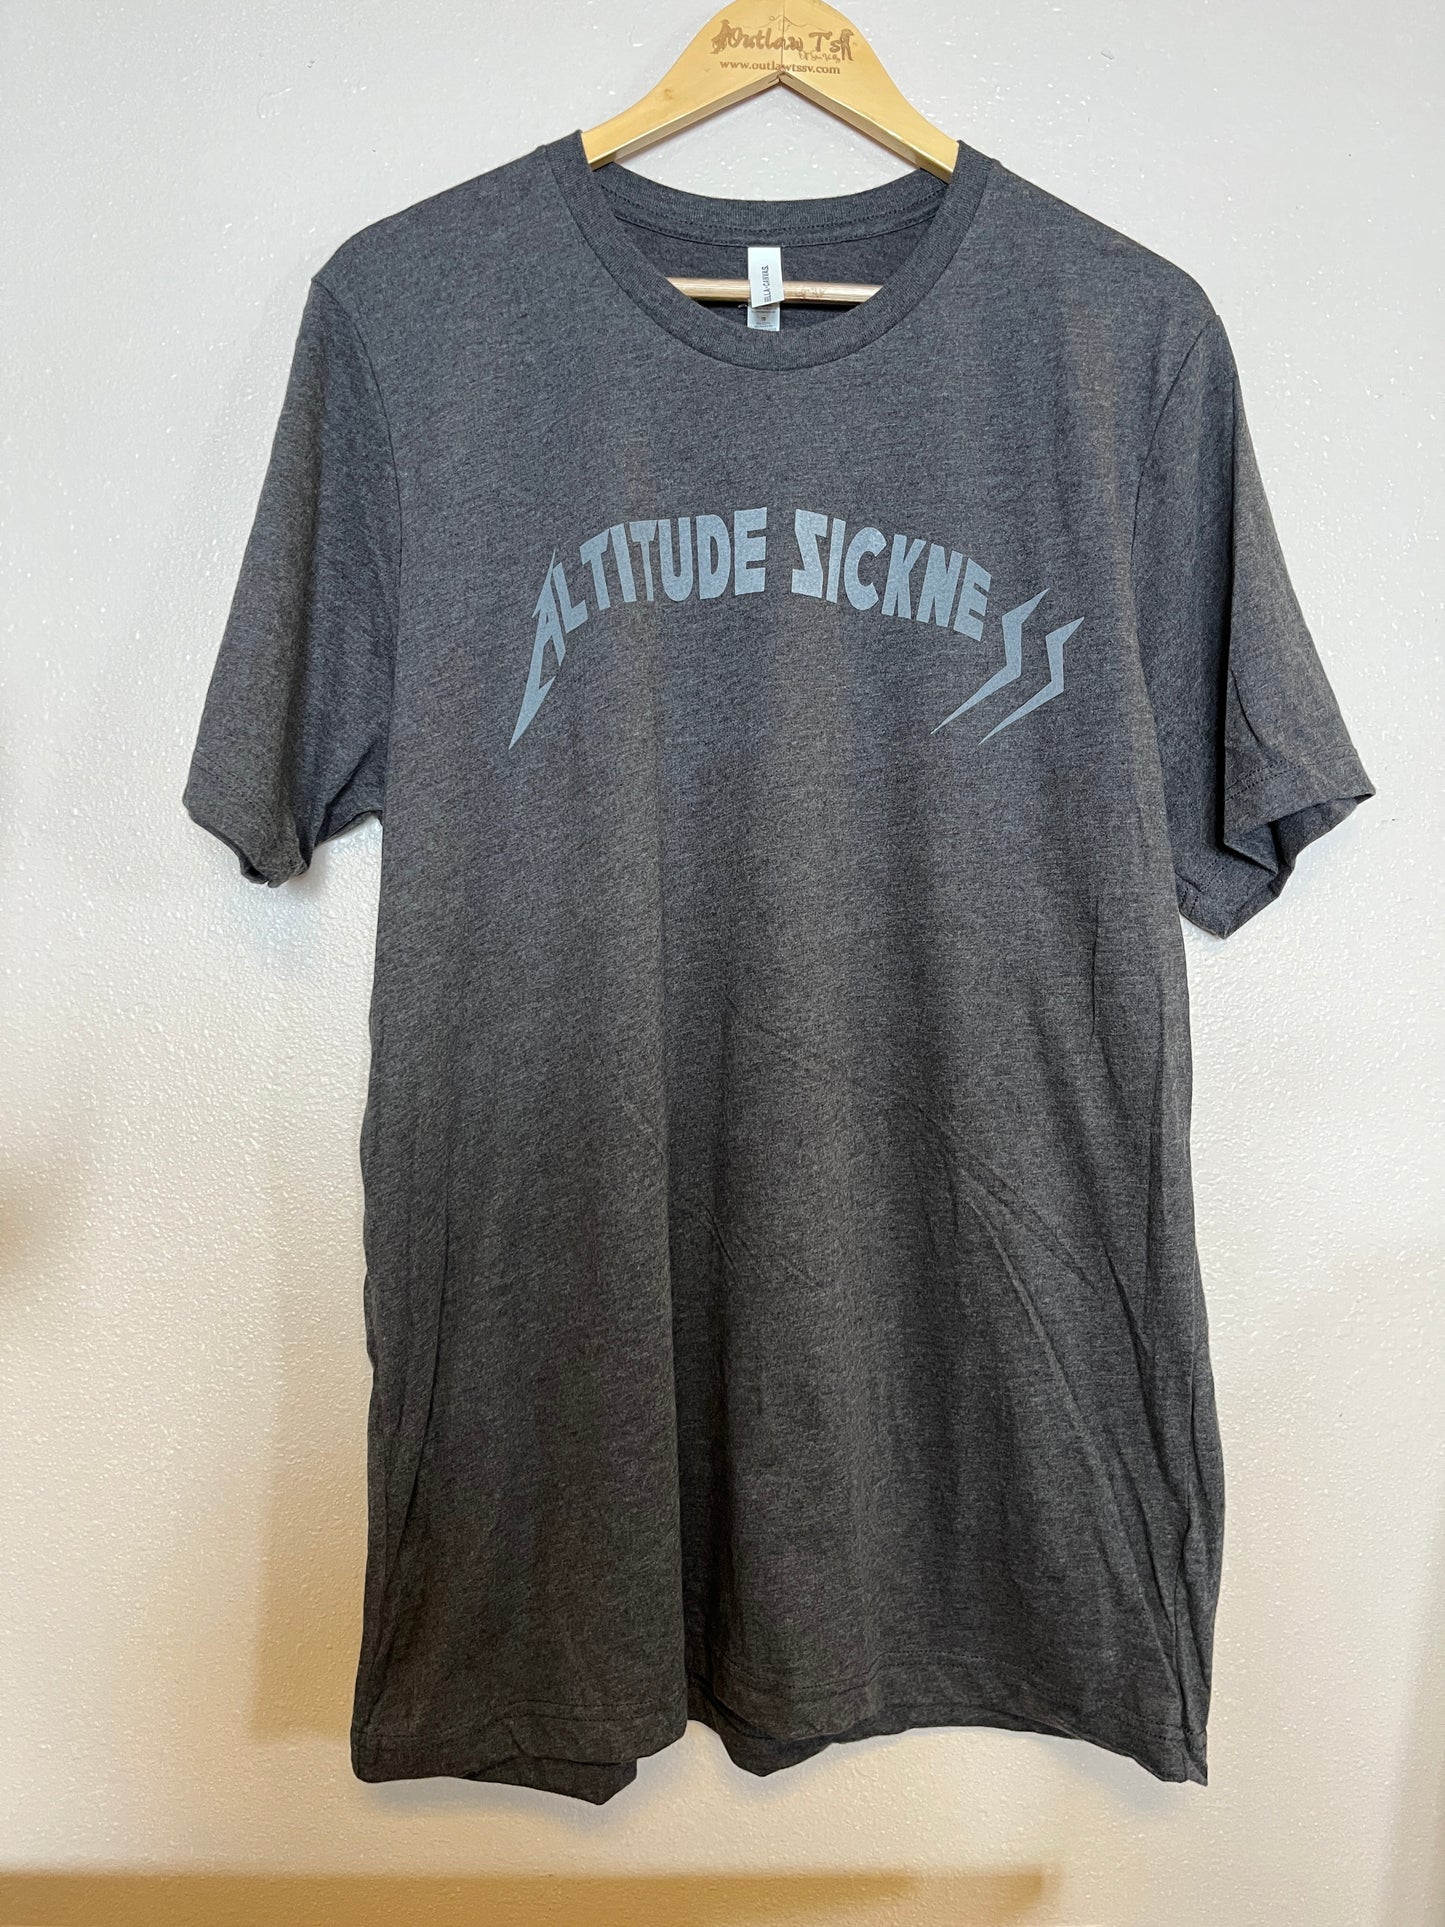 Altitude Sickness Adult Unisex T-shirt